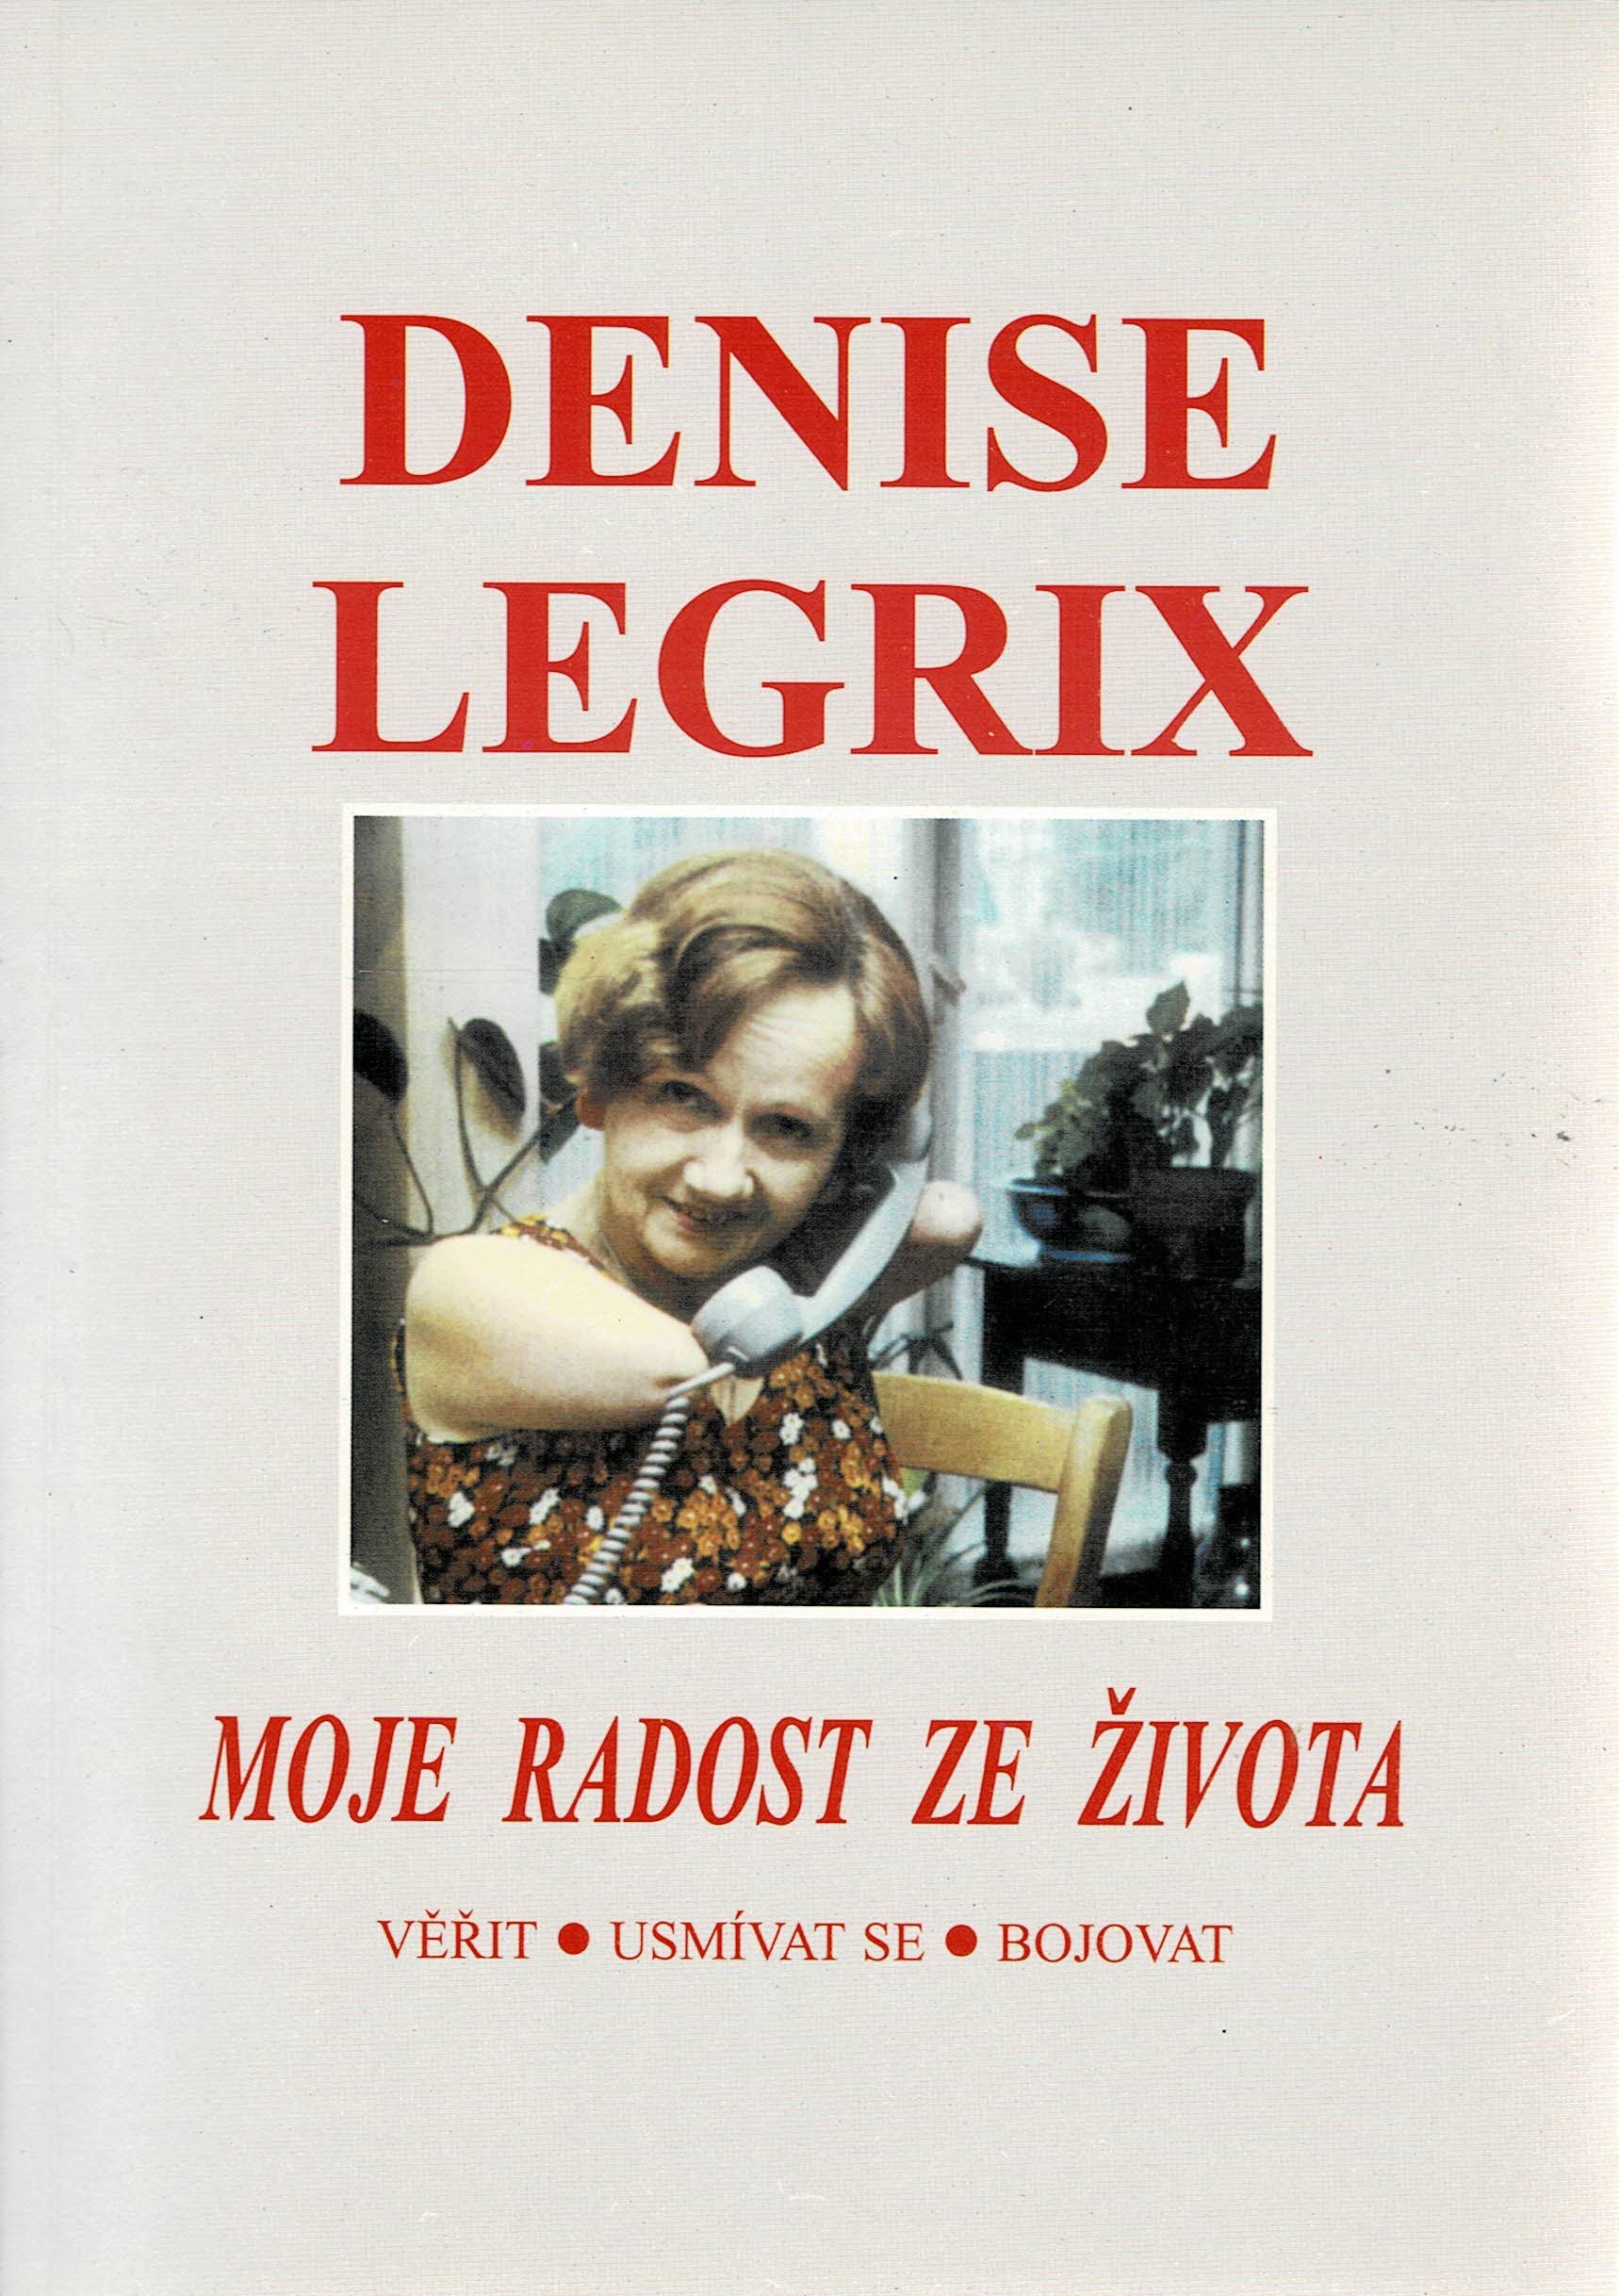 Legrix, Denise: Moje radost ze života